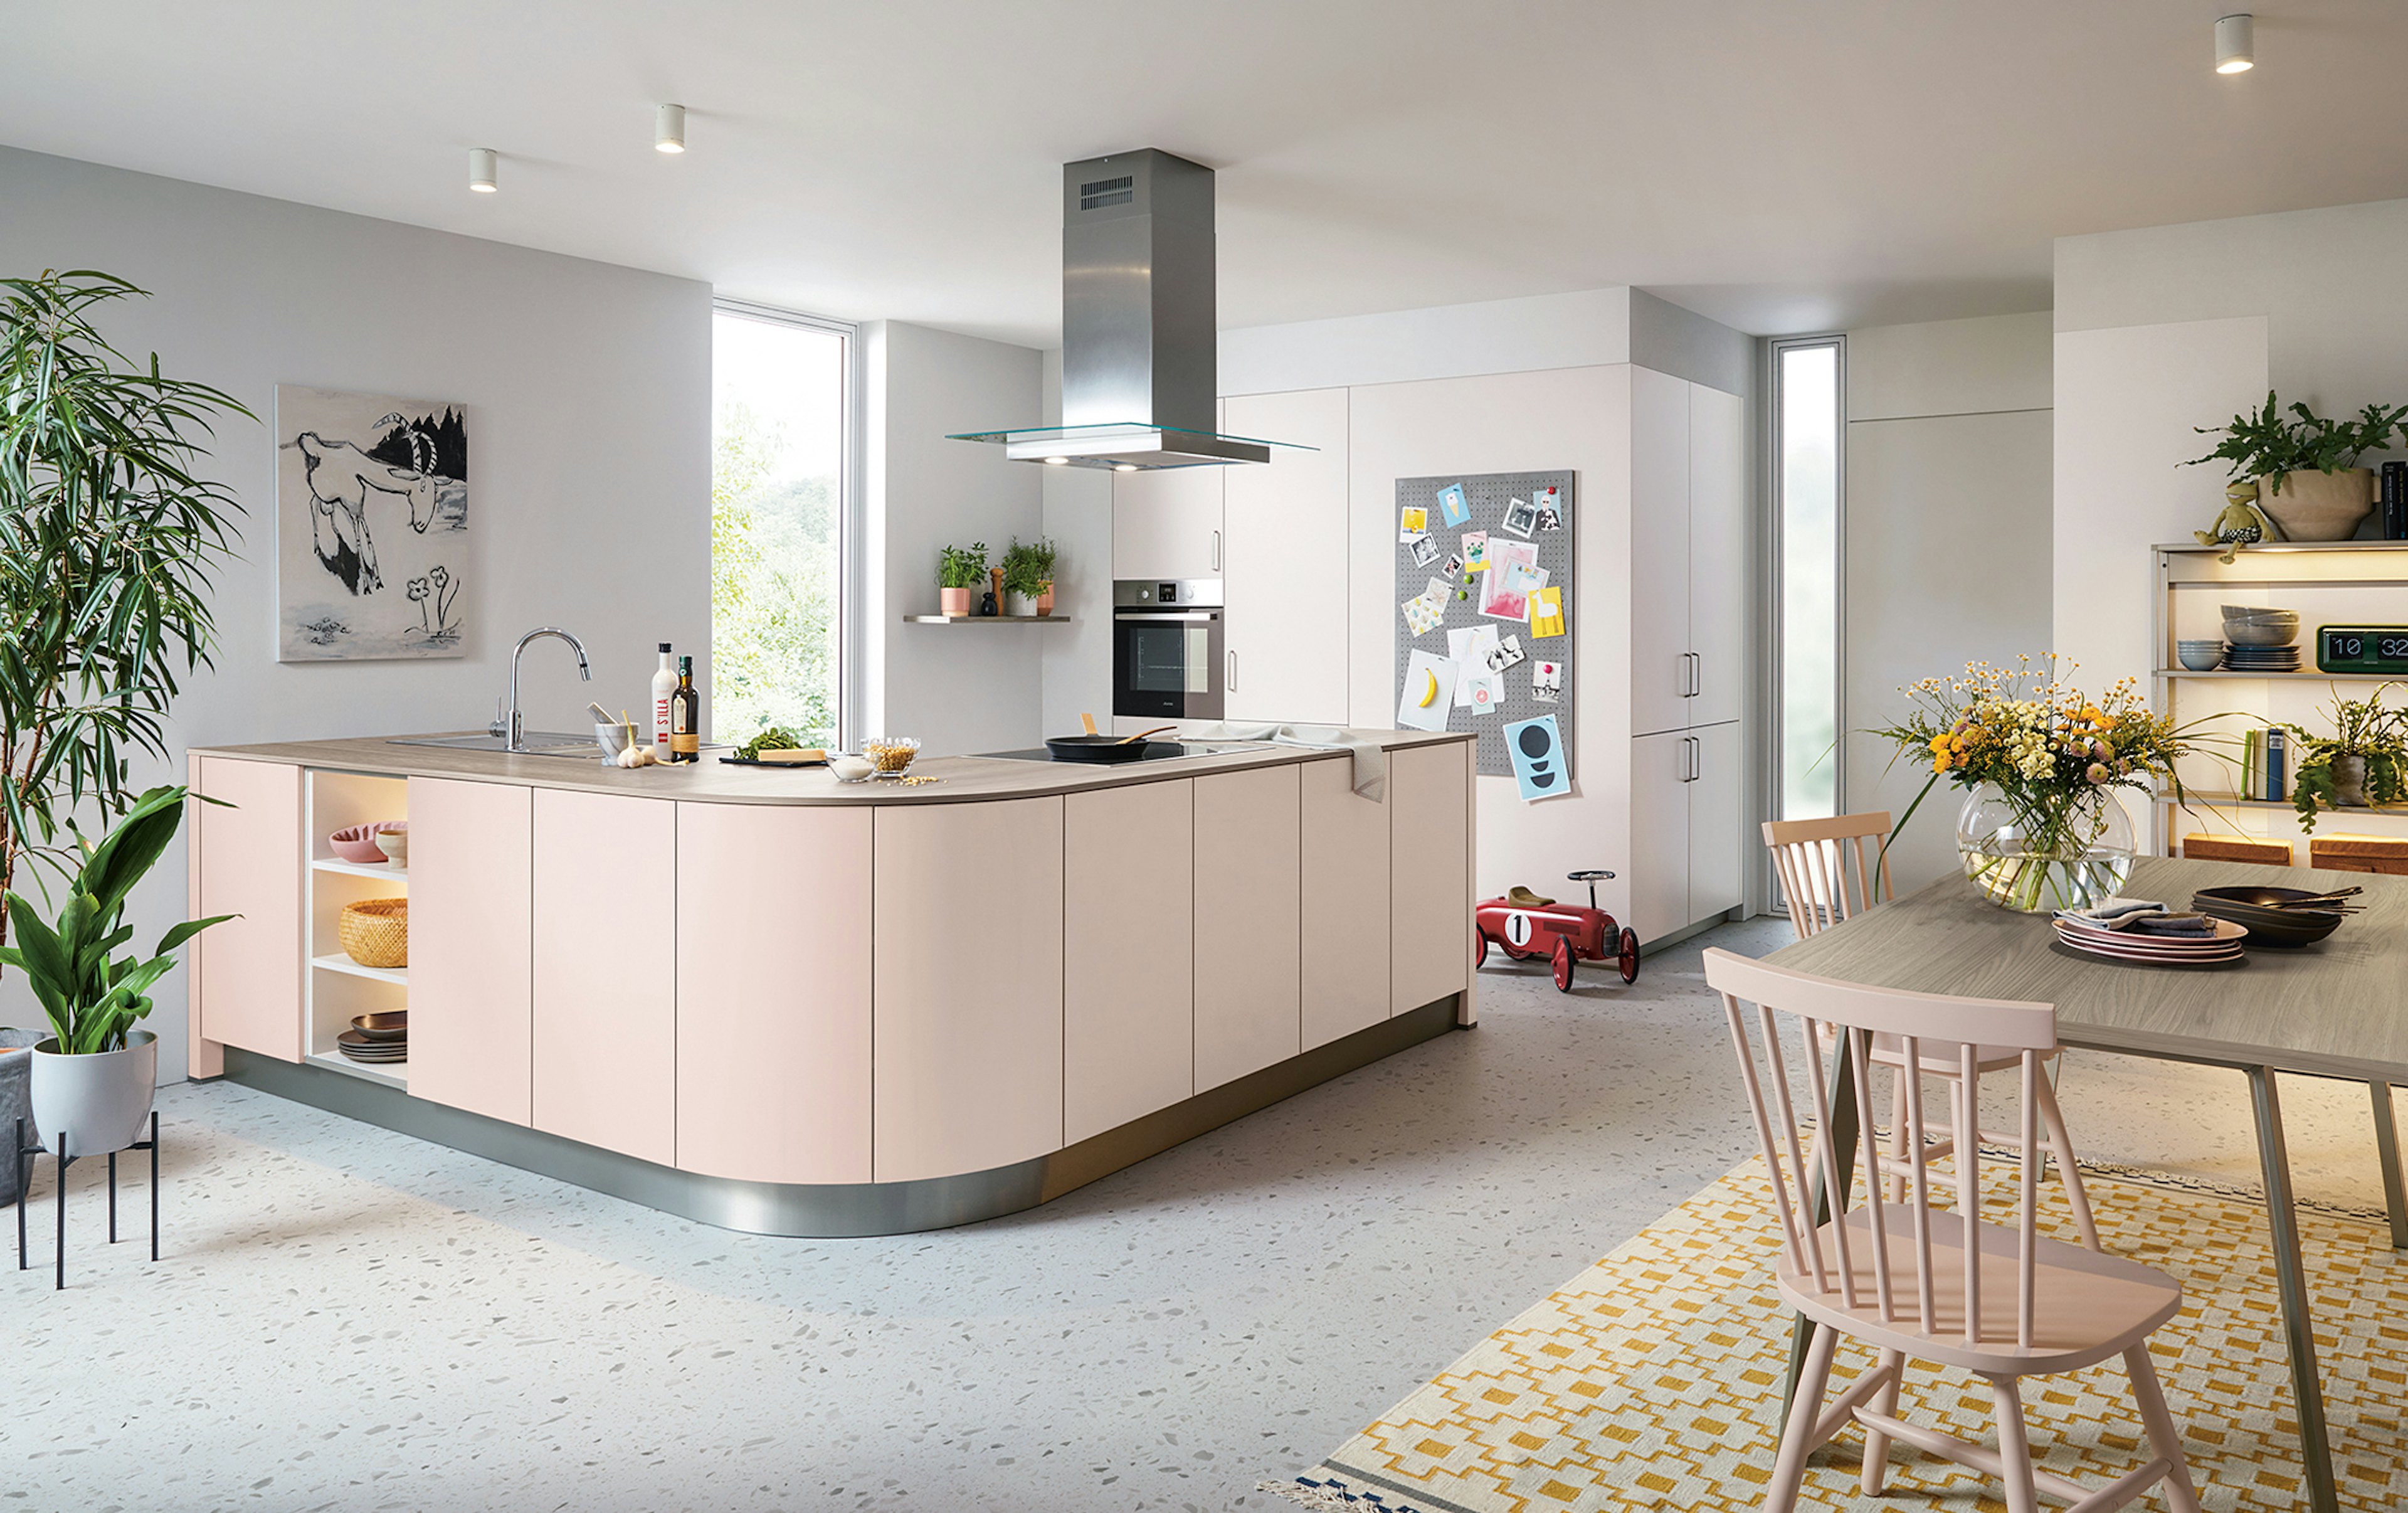 Design keuken in de kleuren zachtroze en mosselwit.